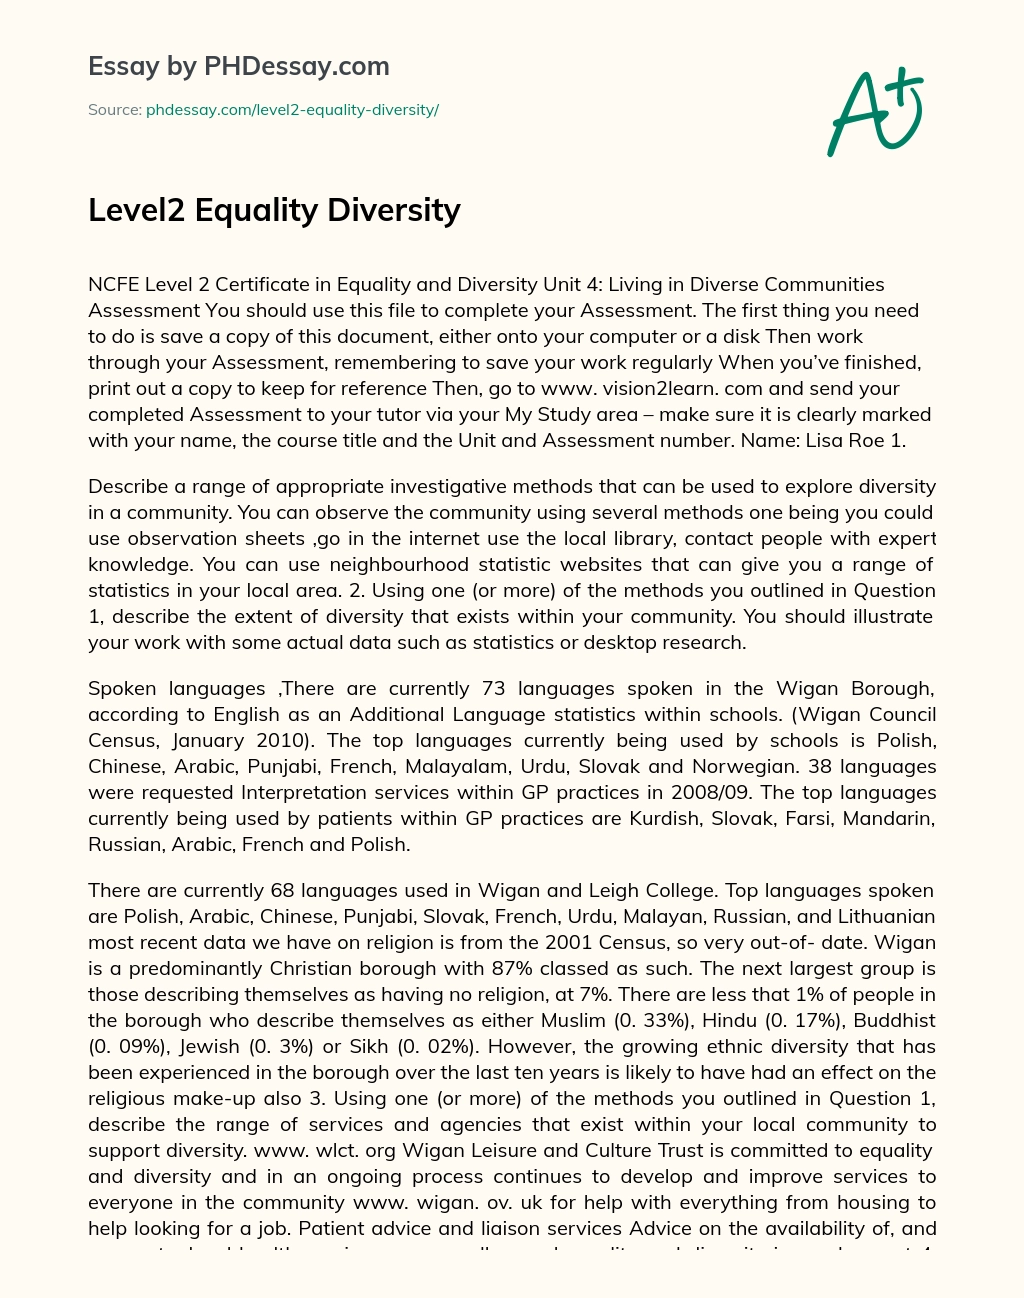 Level2 Equality Diversity essay